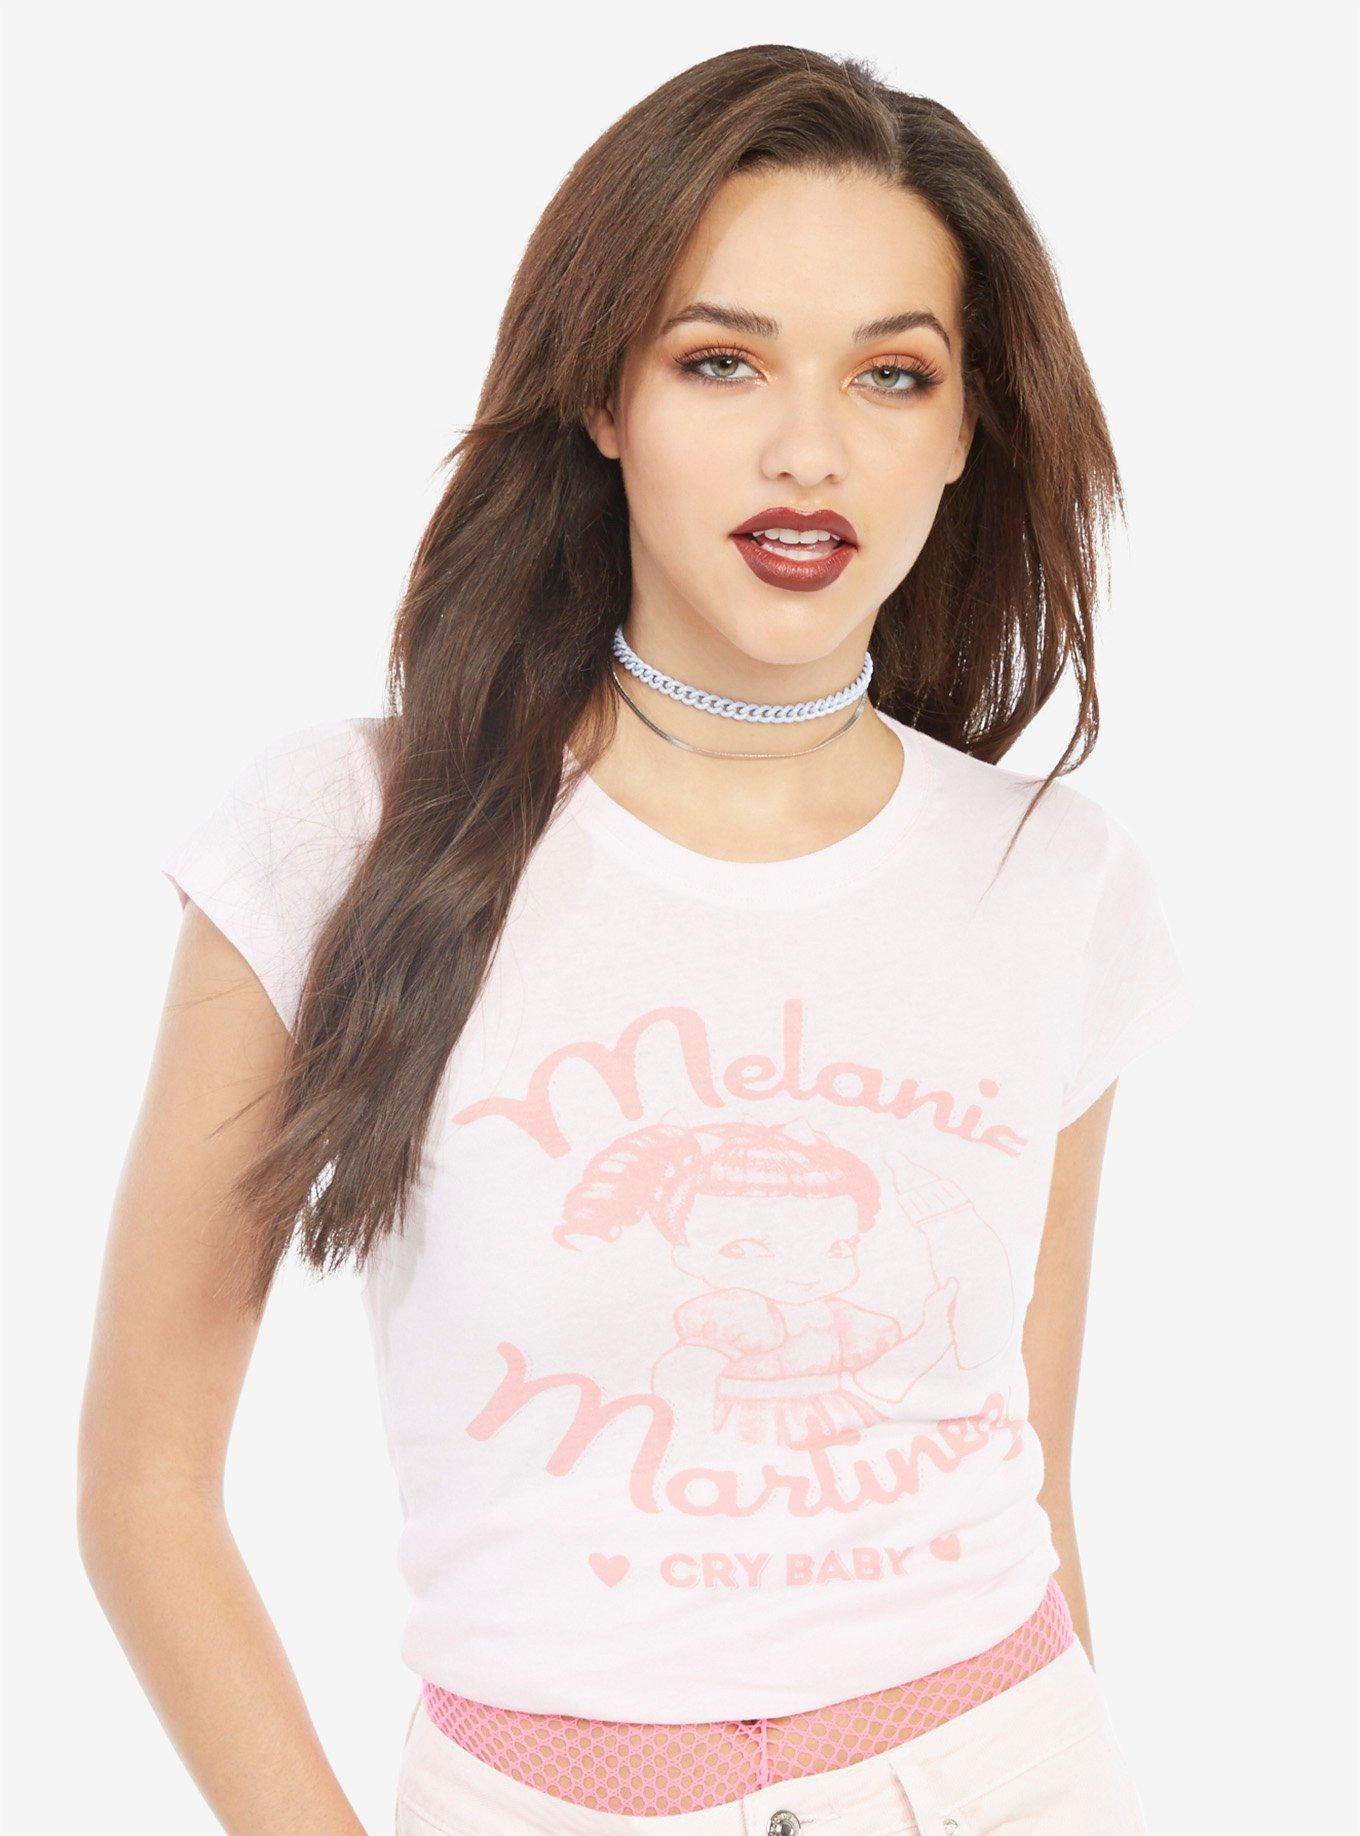 Cry Baby Melanie Martinez Shirt Cheap